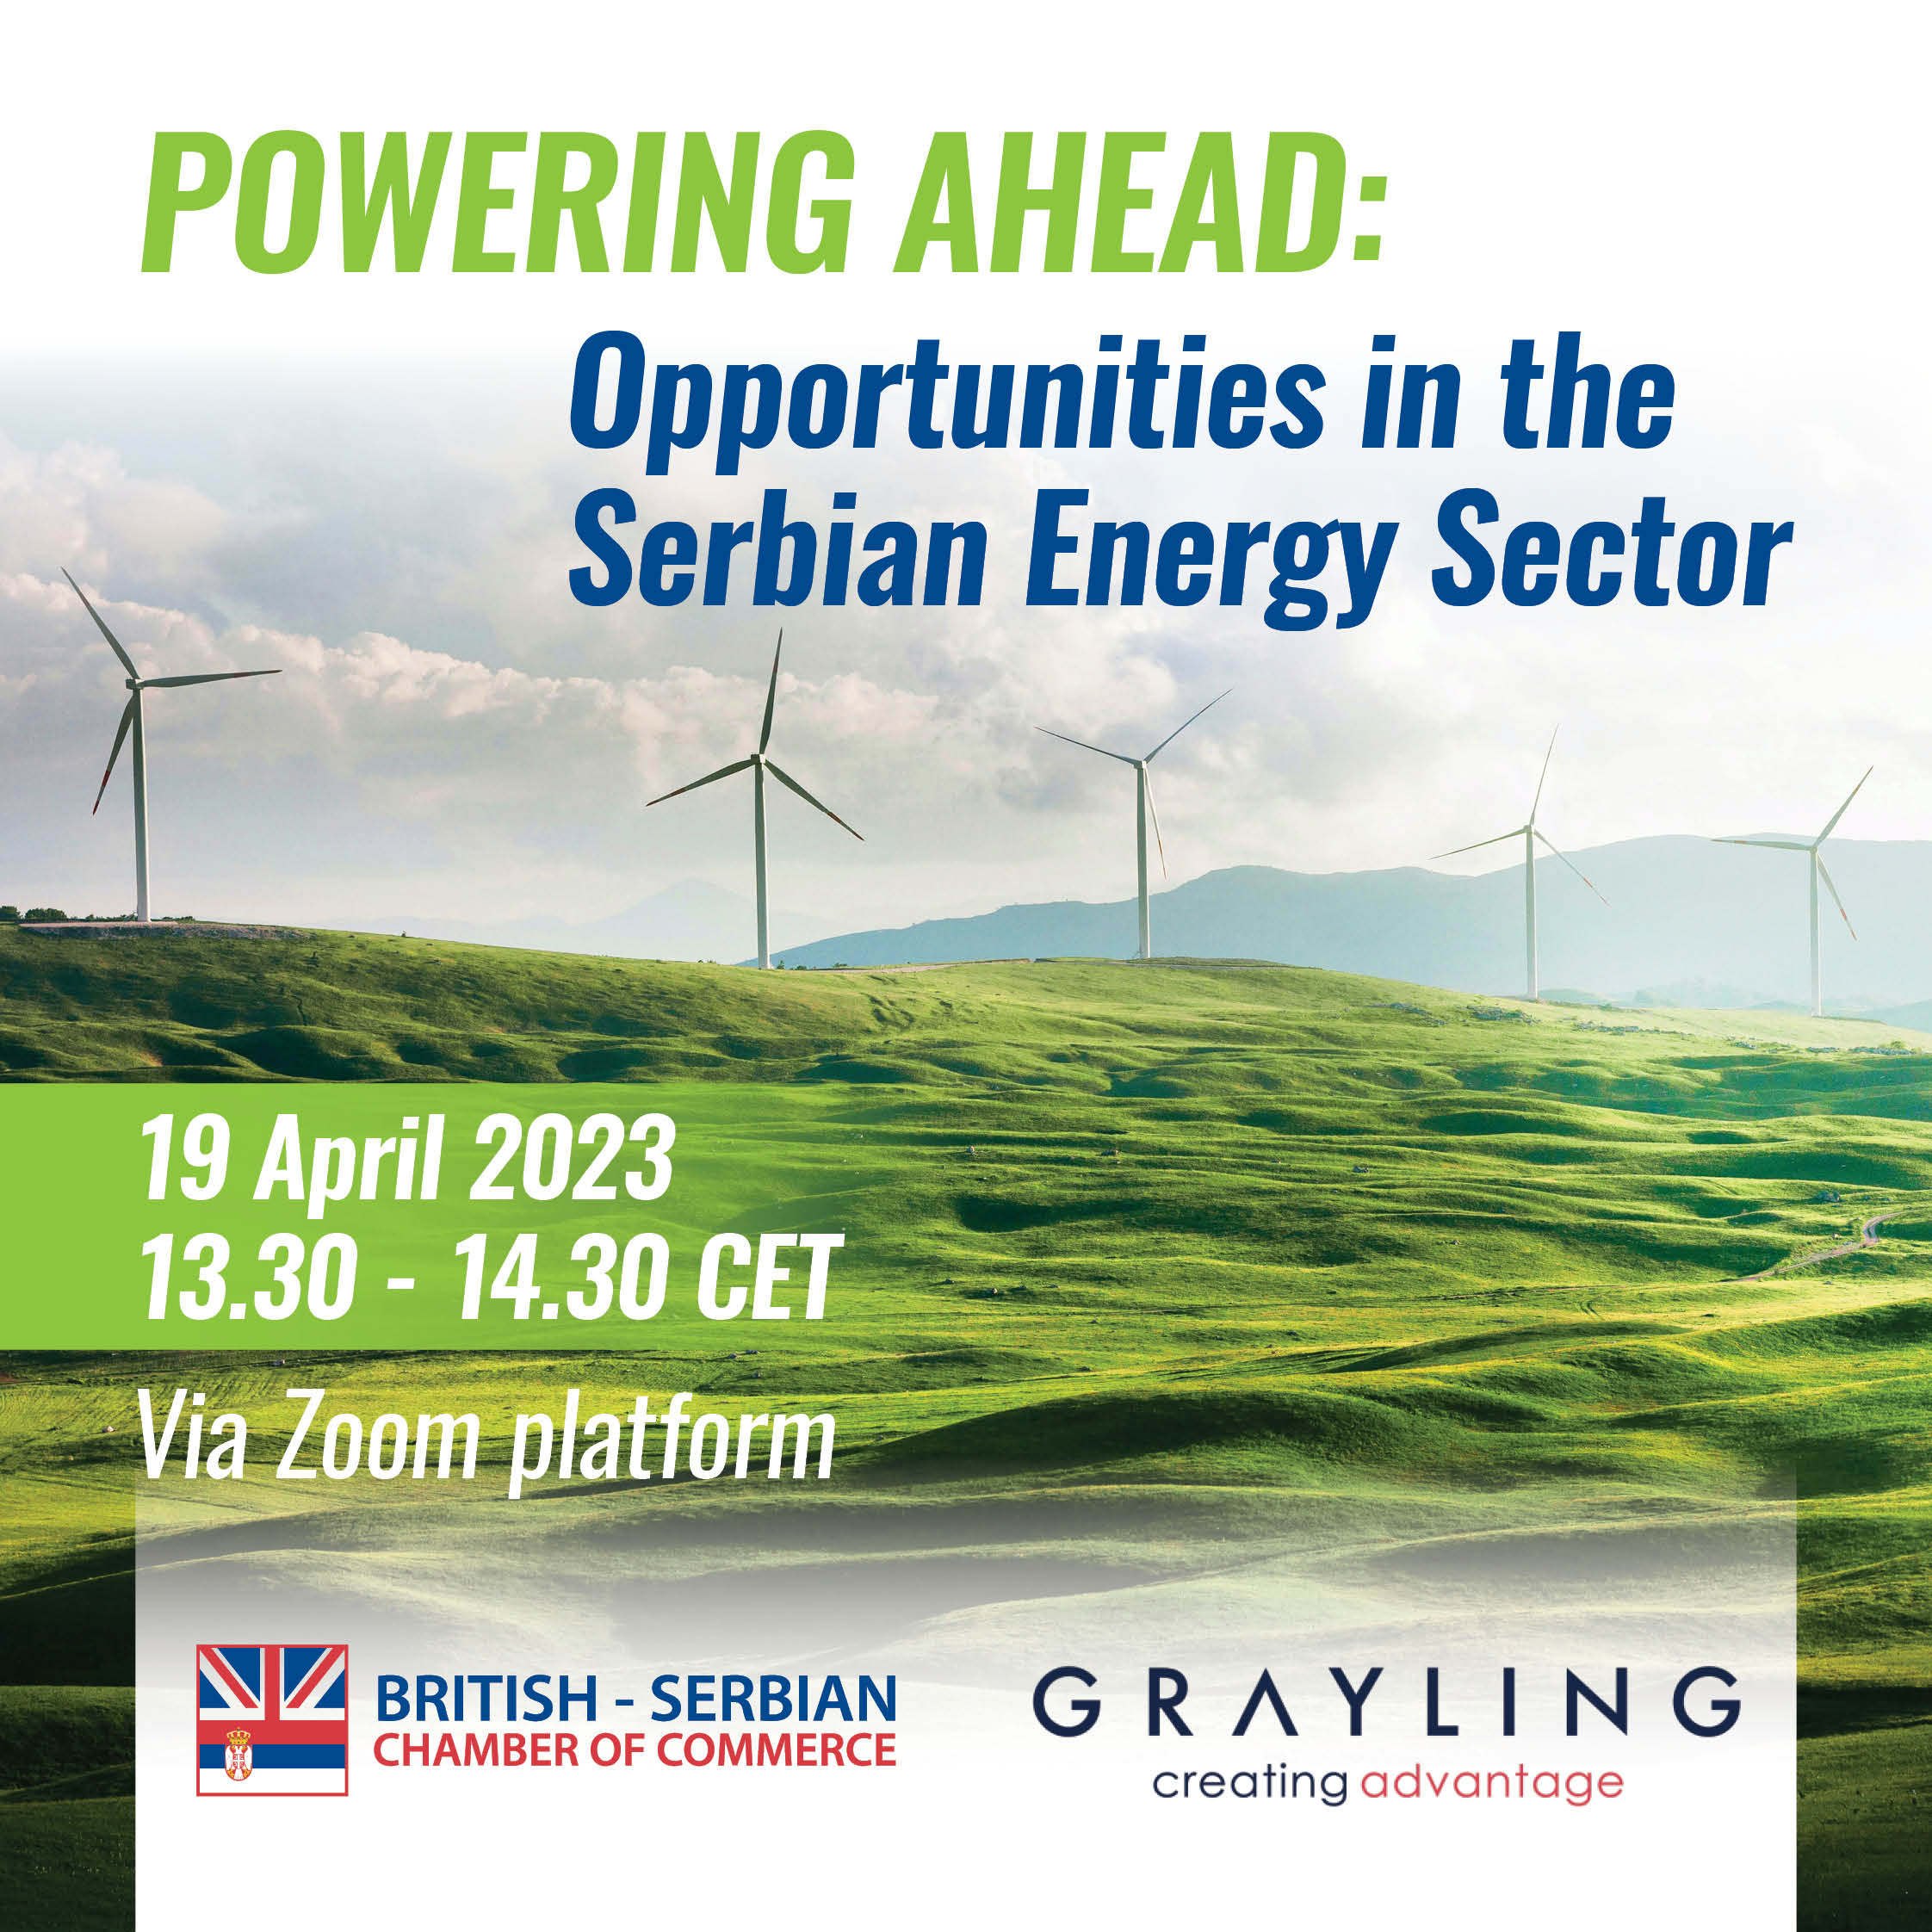 Webinar - "Powering Ahead: Opportunities in the Serbian Energy Sector"